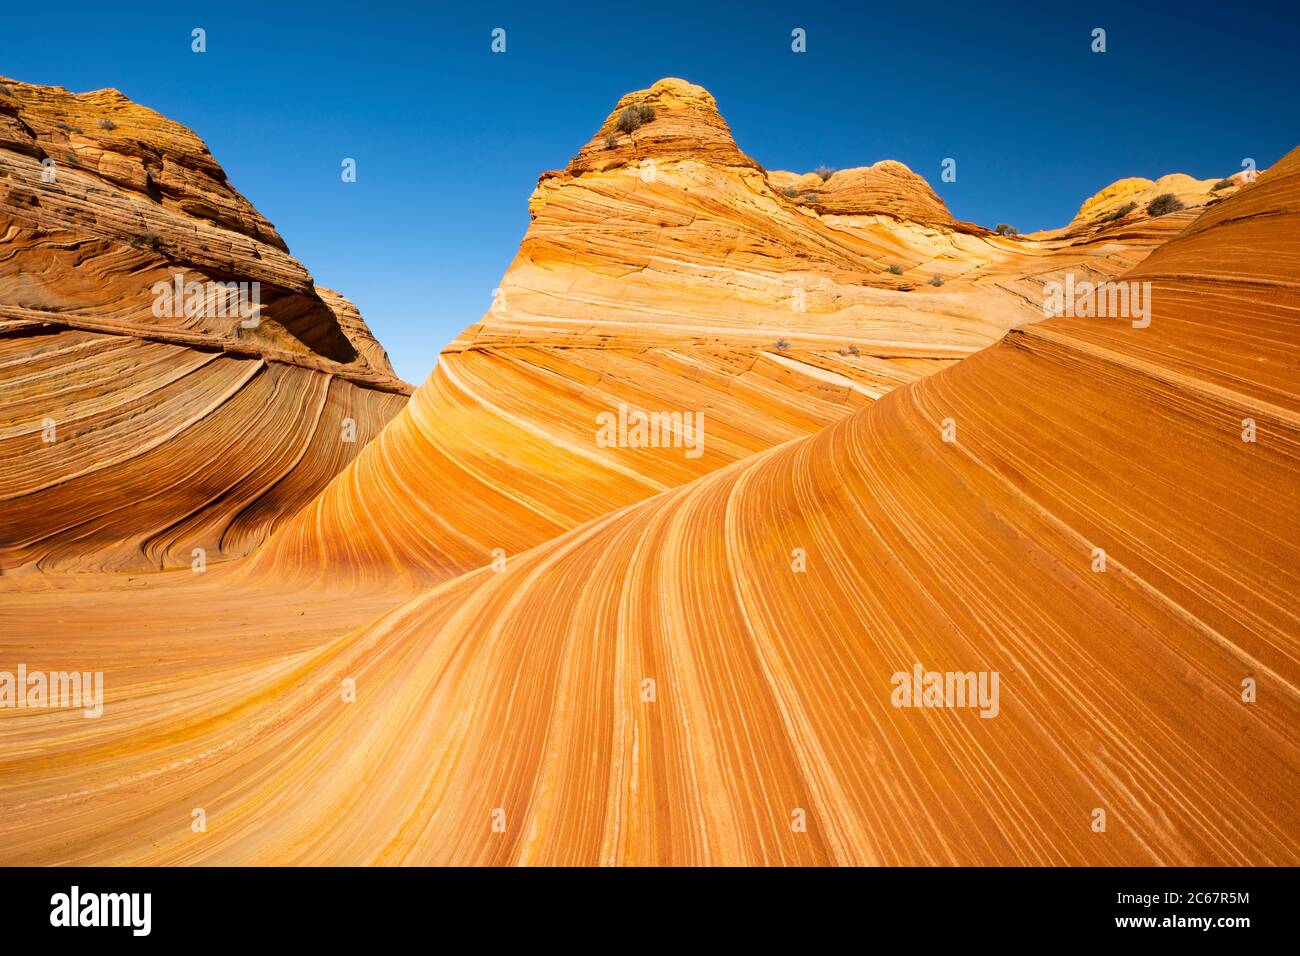 Scenic landscape with rock formations, Arizona, USA Stock Photo